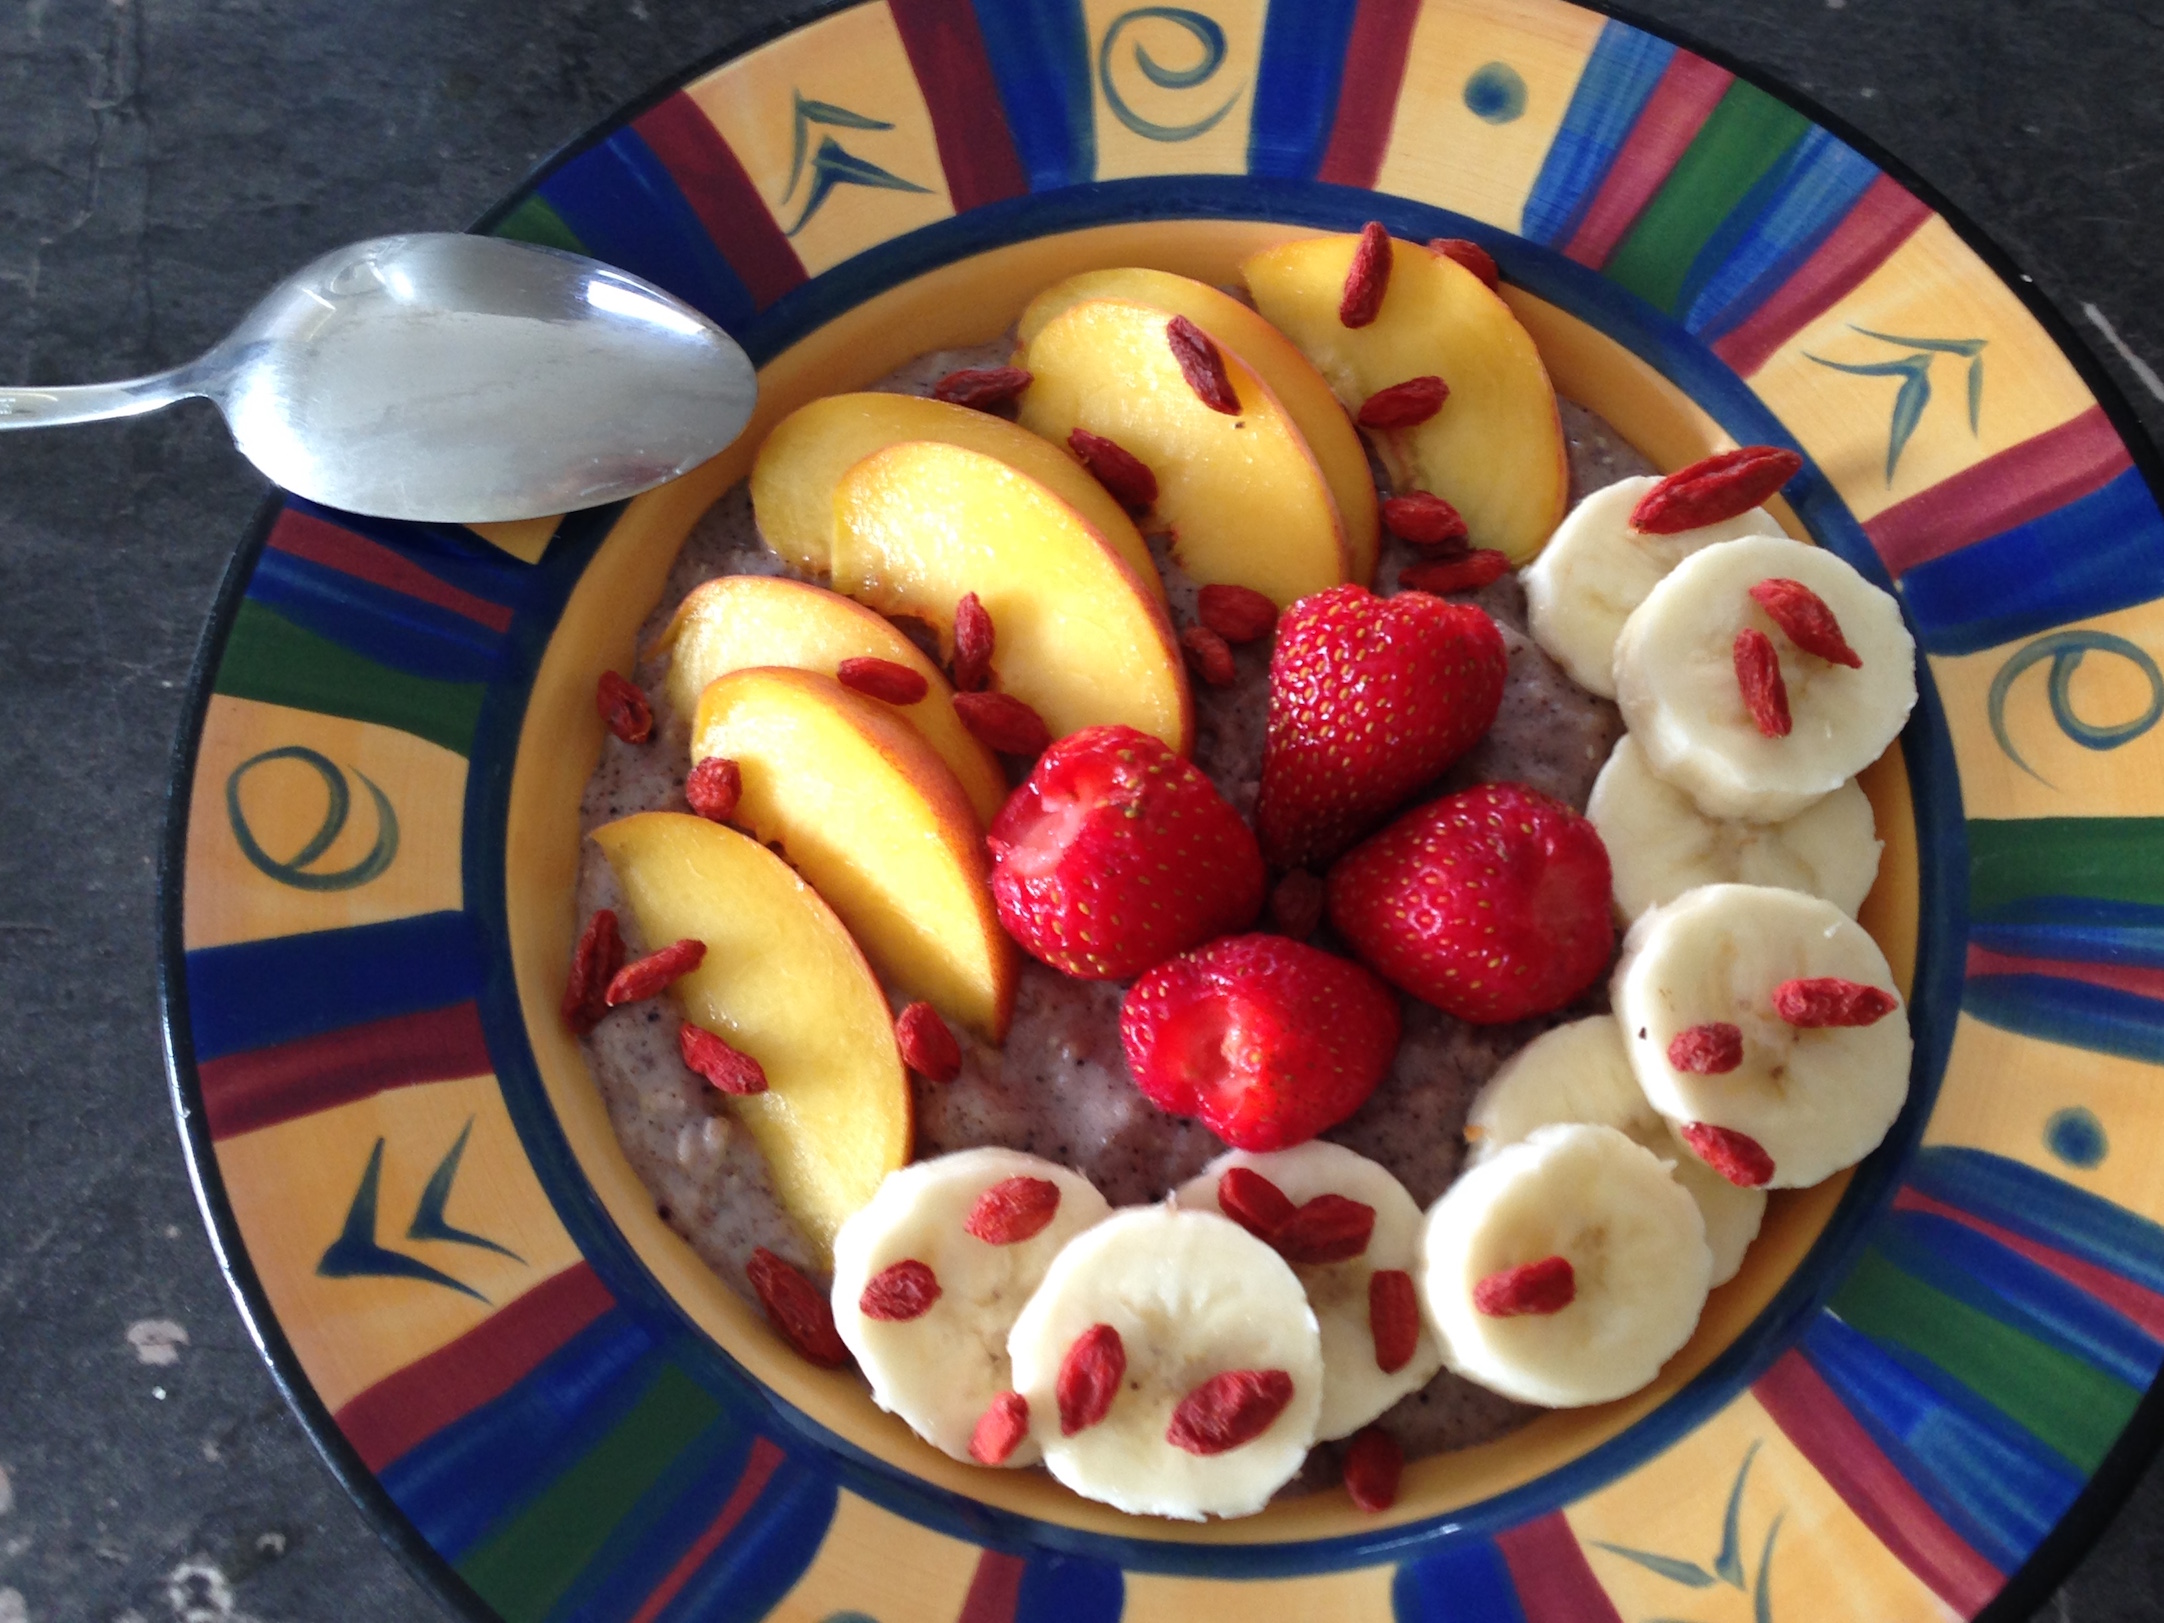 Coconut milk porridge topped with fruit